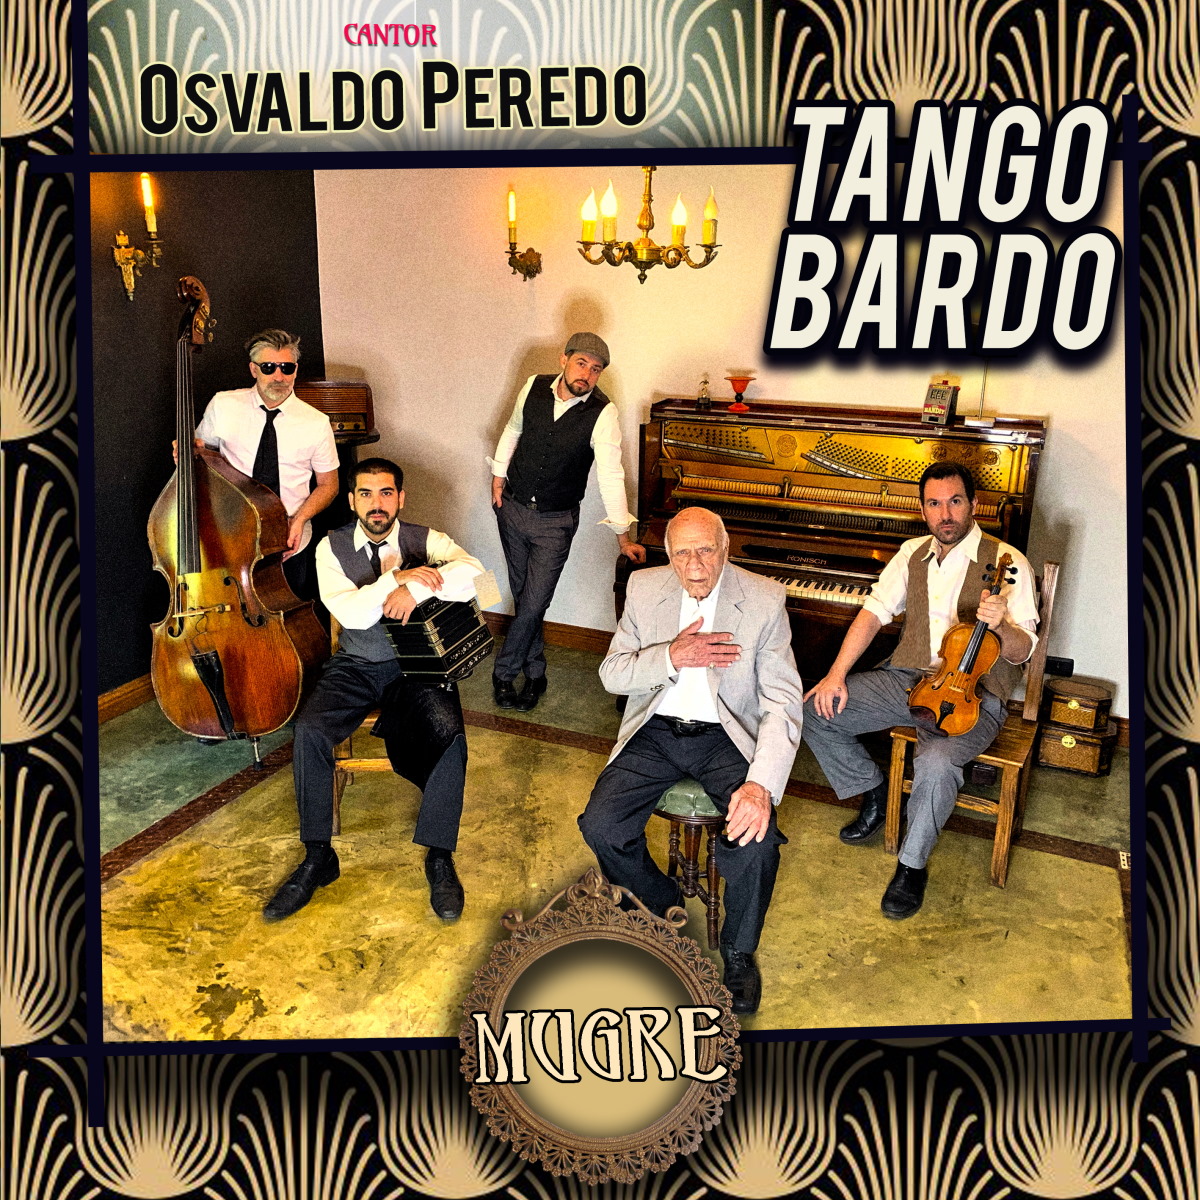 Review: Mugre by Tango Bardo